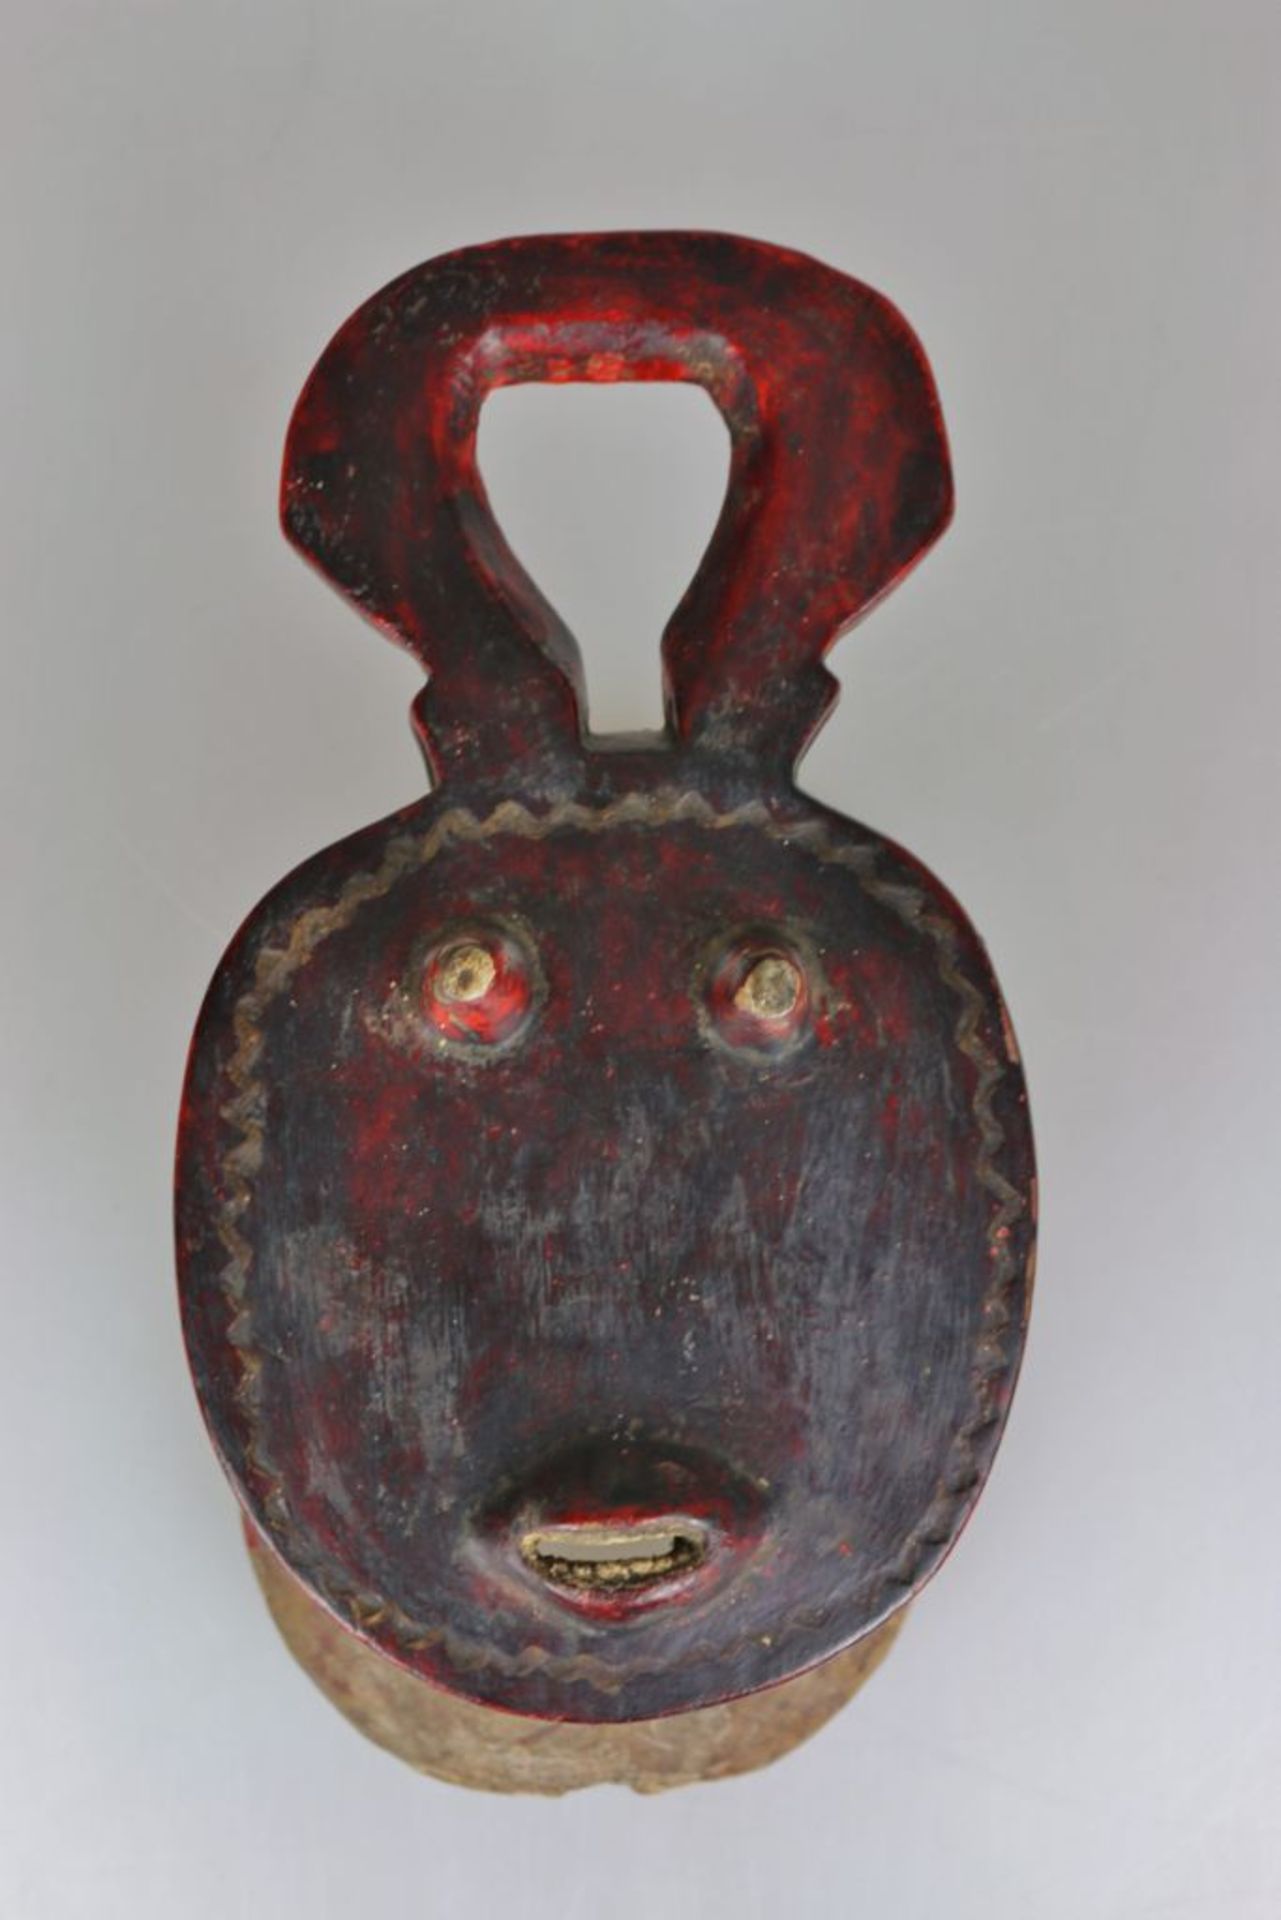 BAULE Goli Mask, Elfenbeinküste, kplekple yaswa, Holz, Kaolin, Erdpigmente. Das scheibenförmige